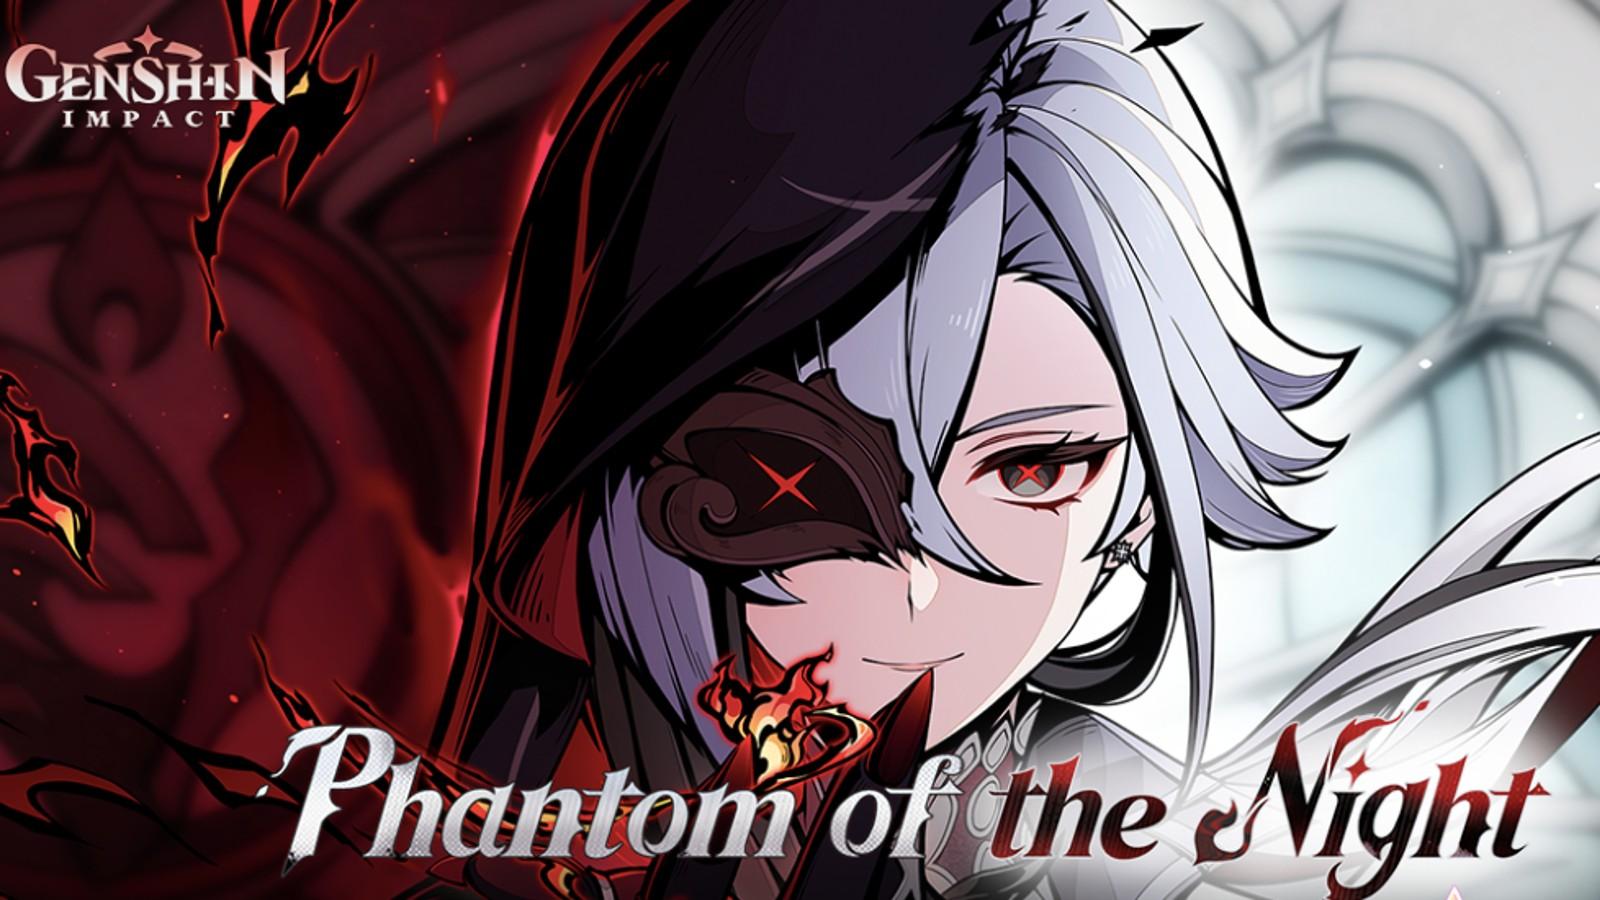 An image of Genshin Impact Phantom of the Night key art.